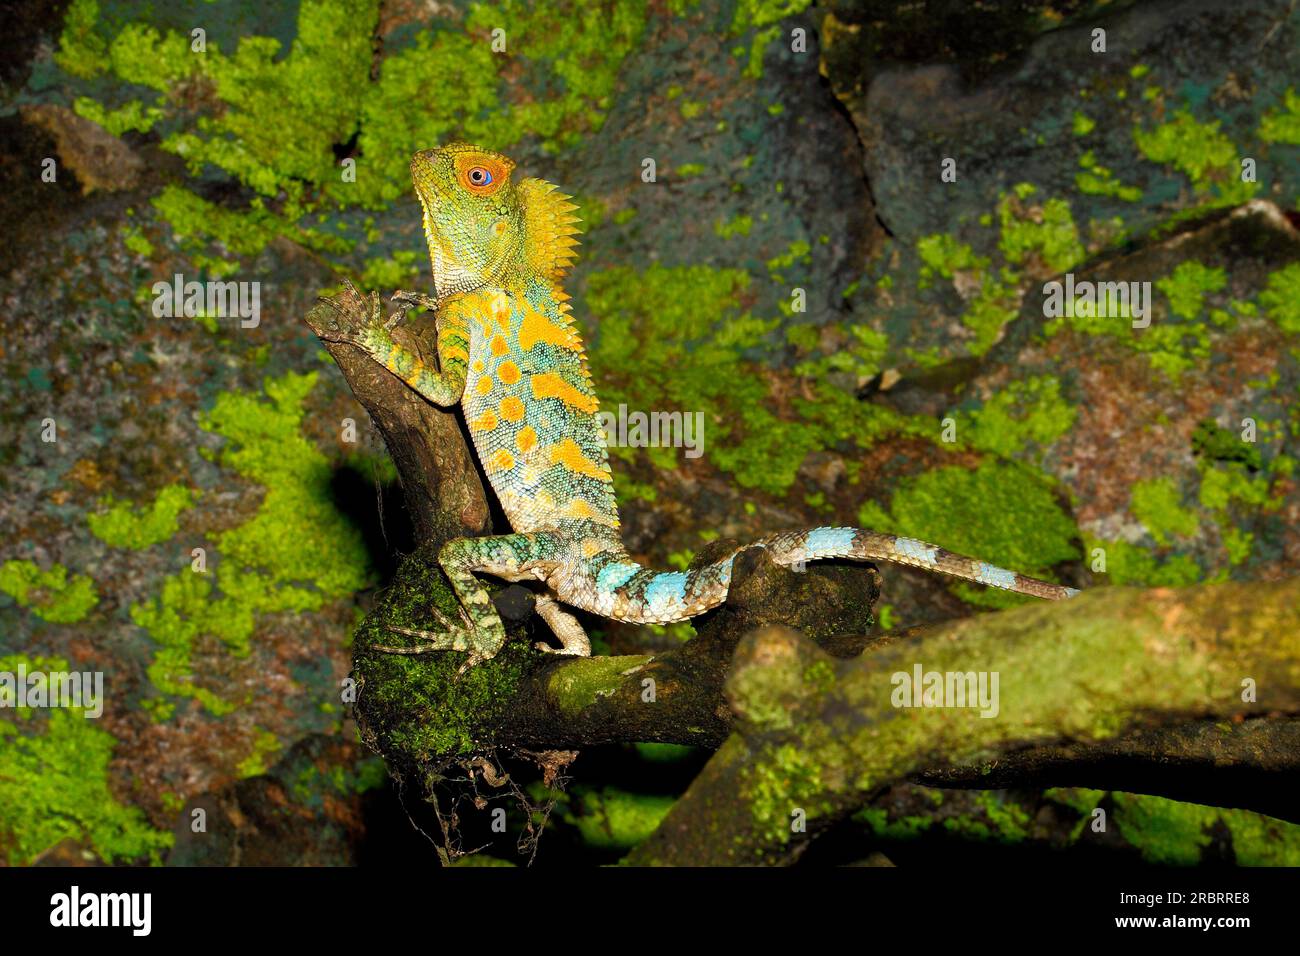 Chameleon Forest Dragon, conosciuto anche come Eared Tree Dragon, Javan Humphead Lizard e Chameleon Anglehead Lizard, Gonocephalus chamaeleontinus. Indonesi Foto Stock